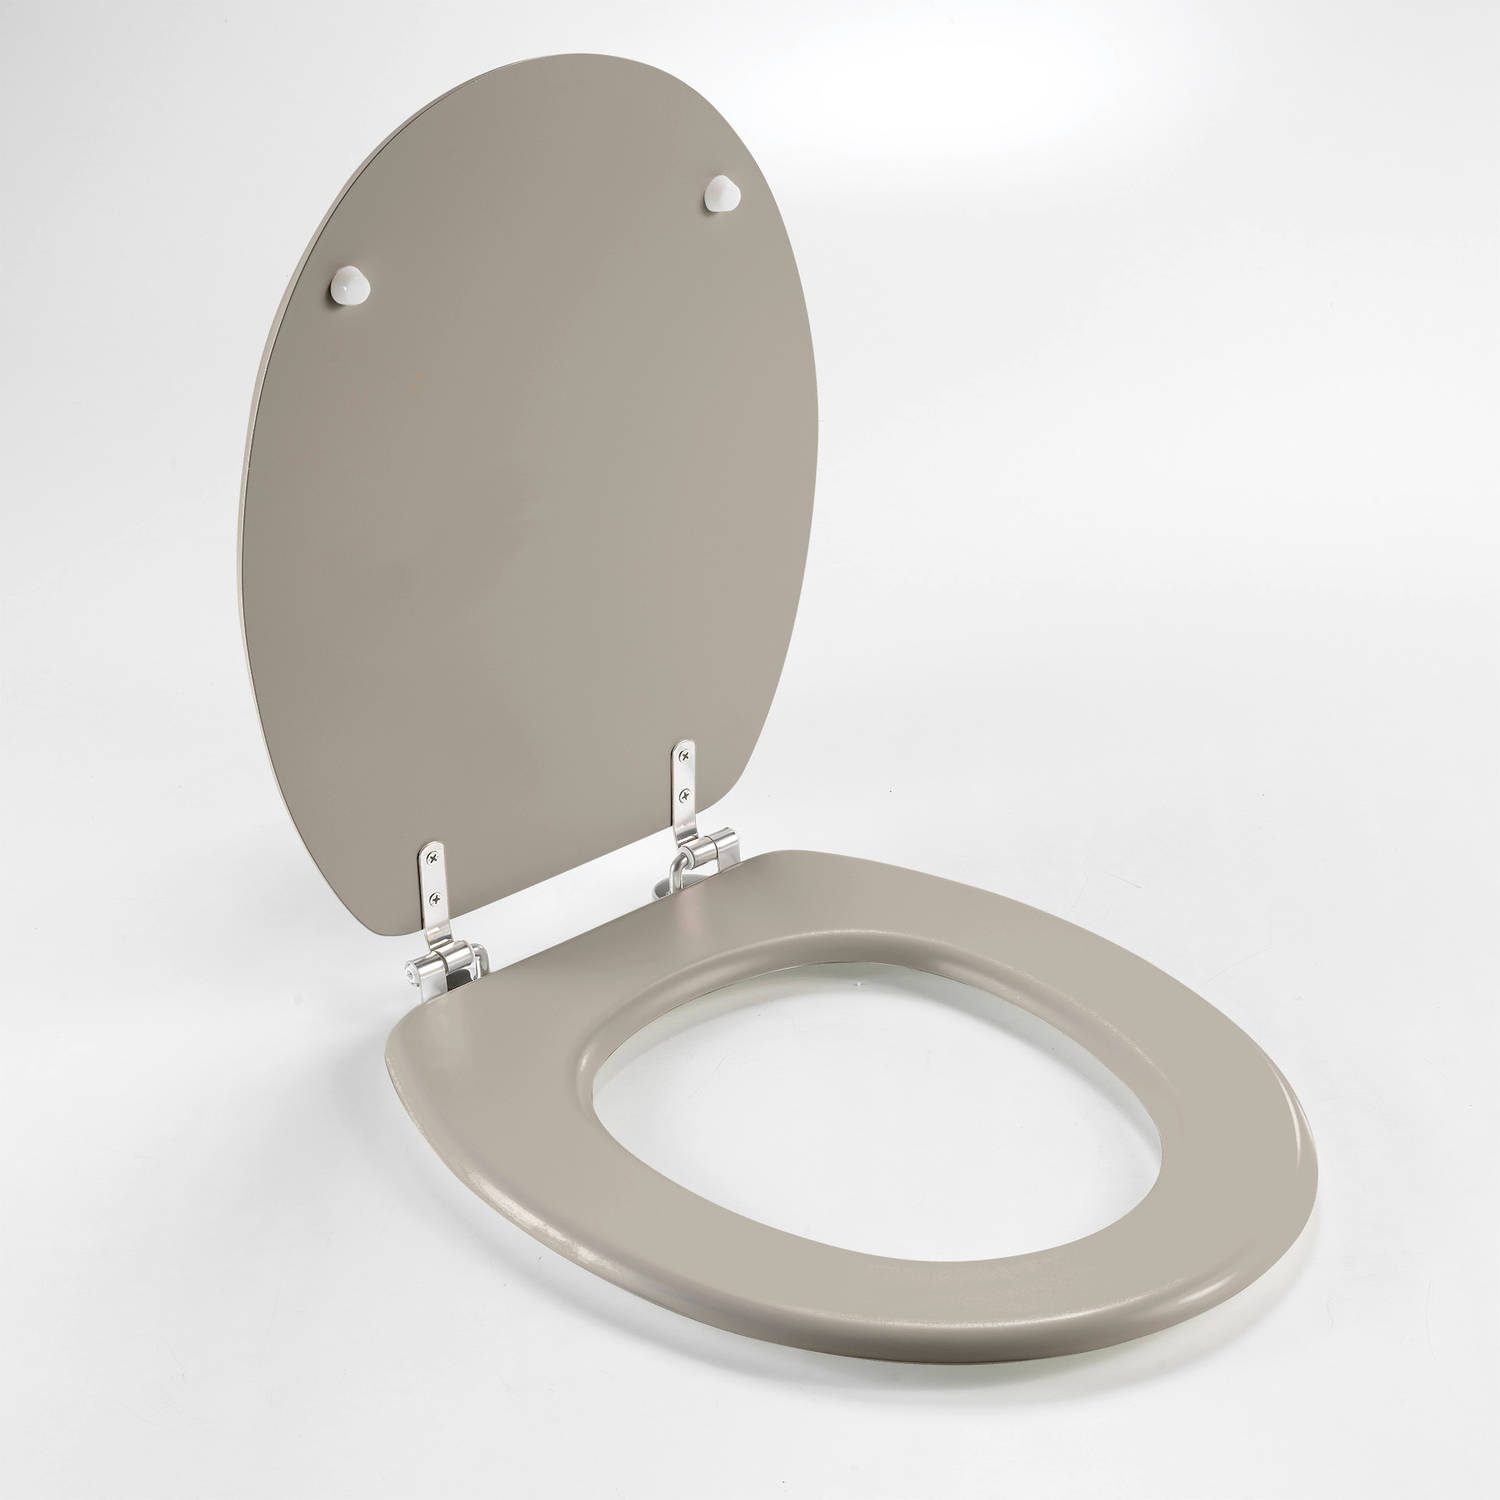 Wicotex-Toiletbril-WC bril MDF-Hout mat taupe inclusief metallic scharnieren.